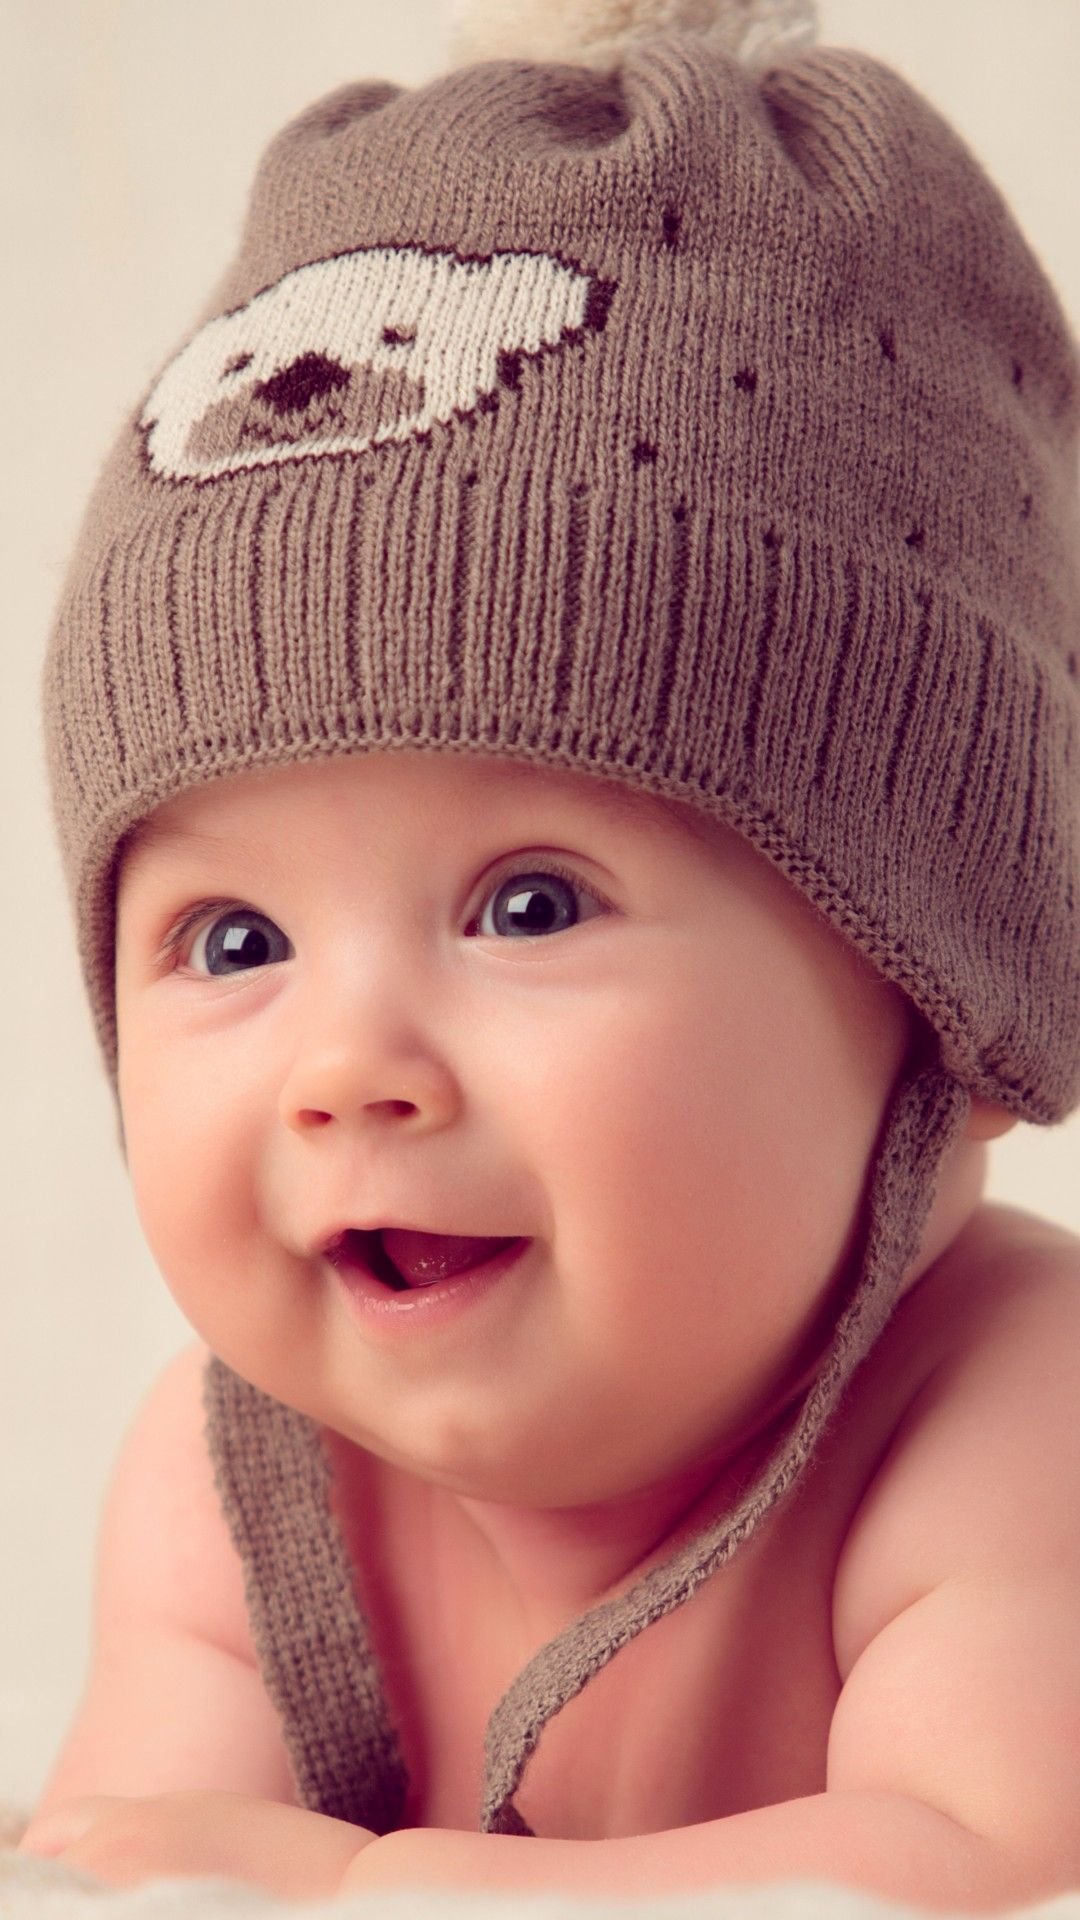 Cute Baby Boy Smile